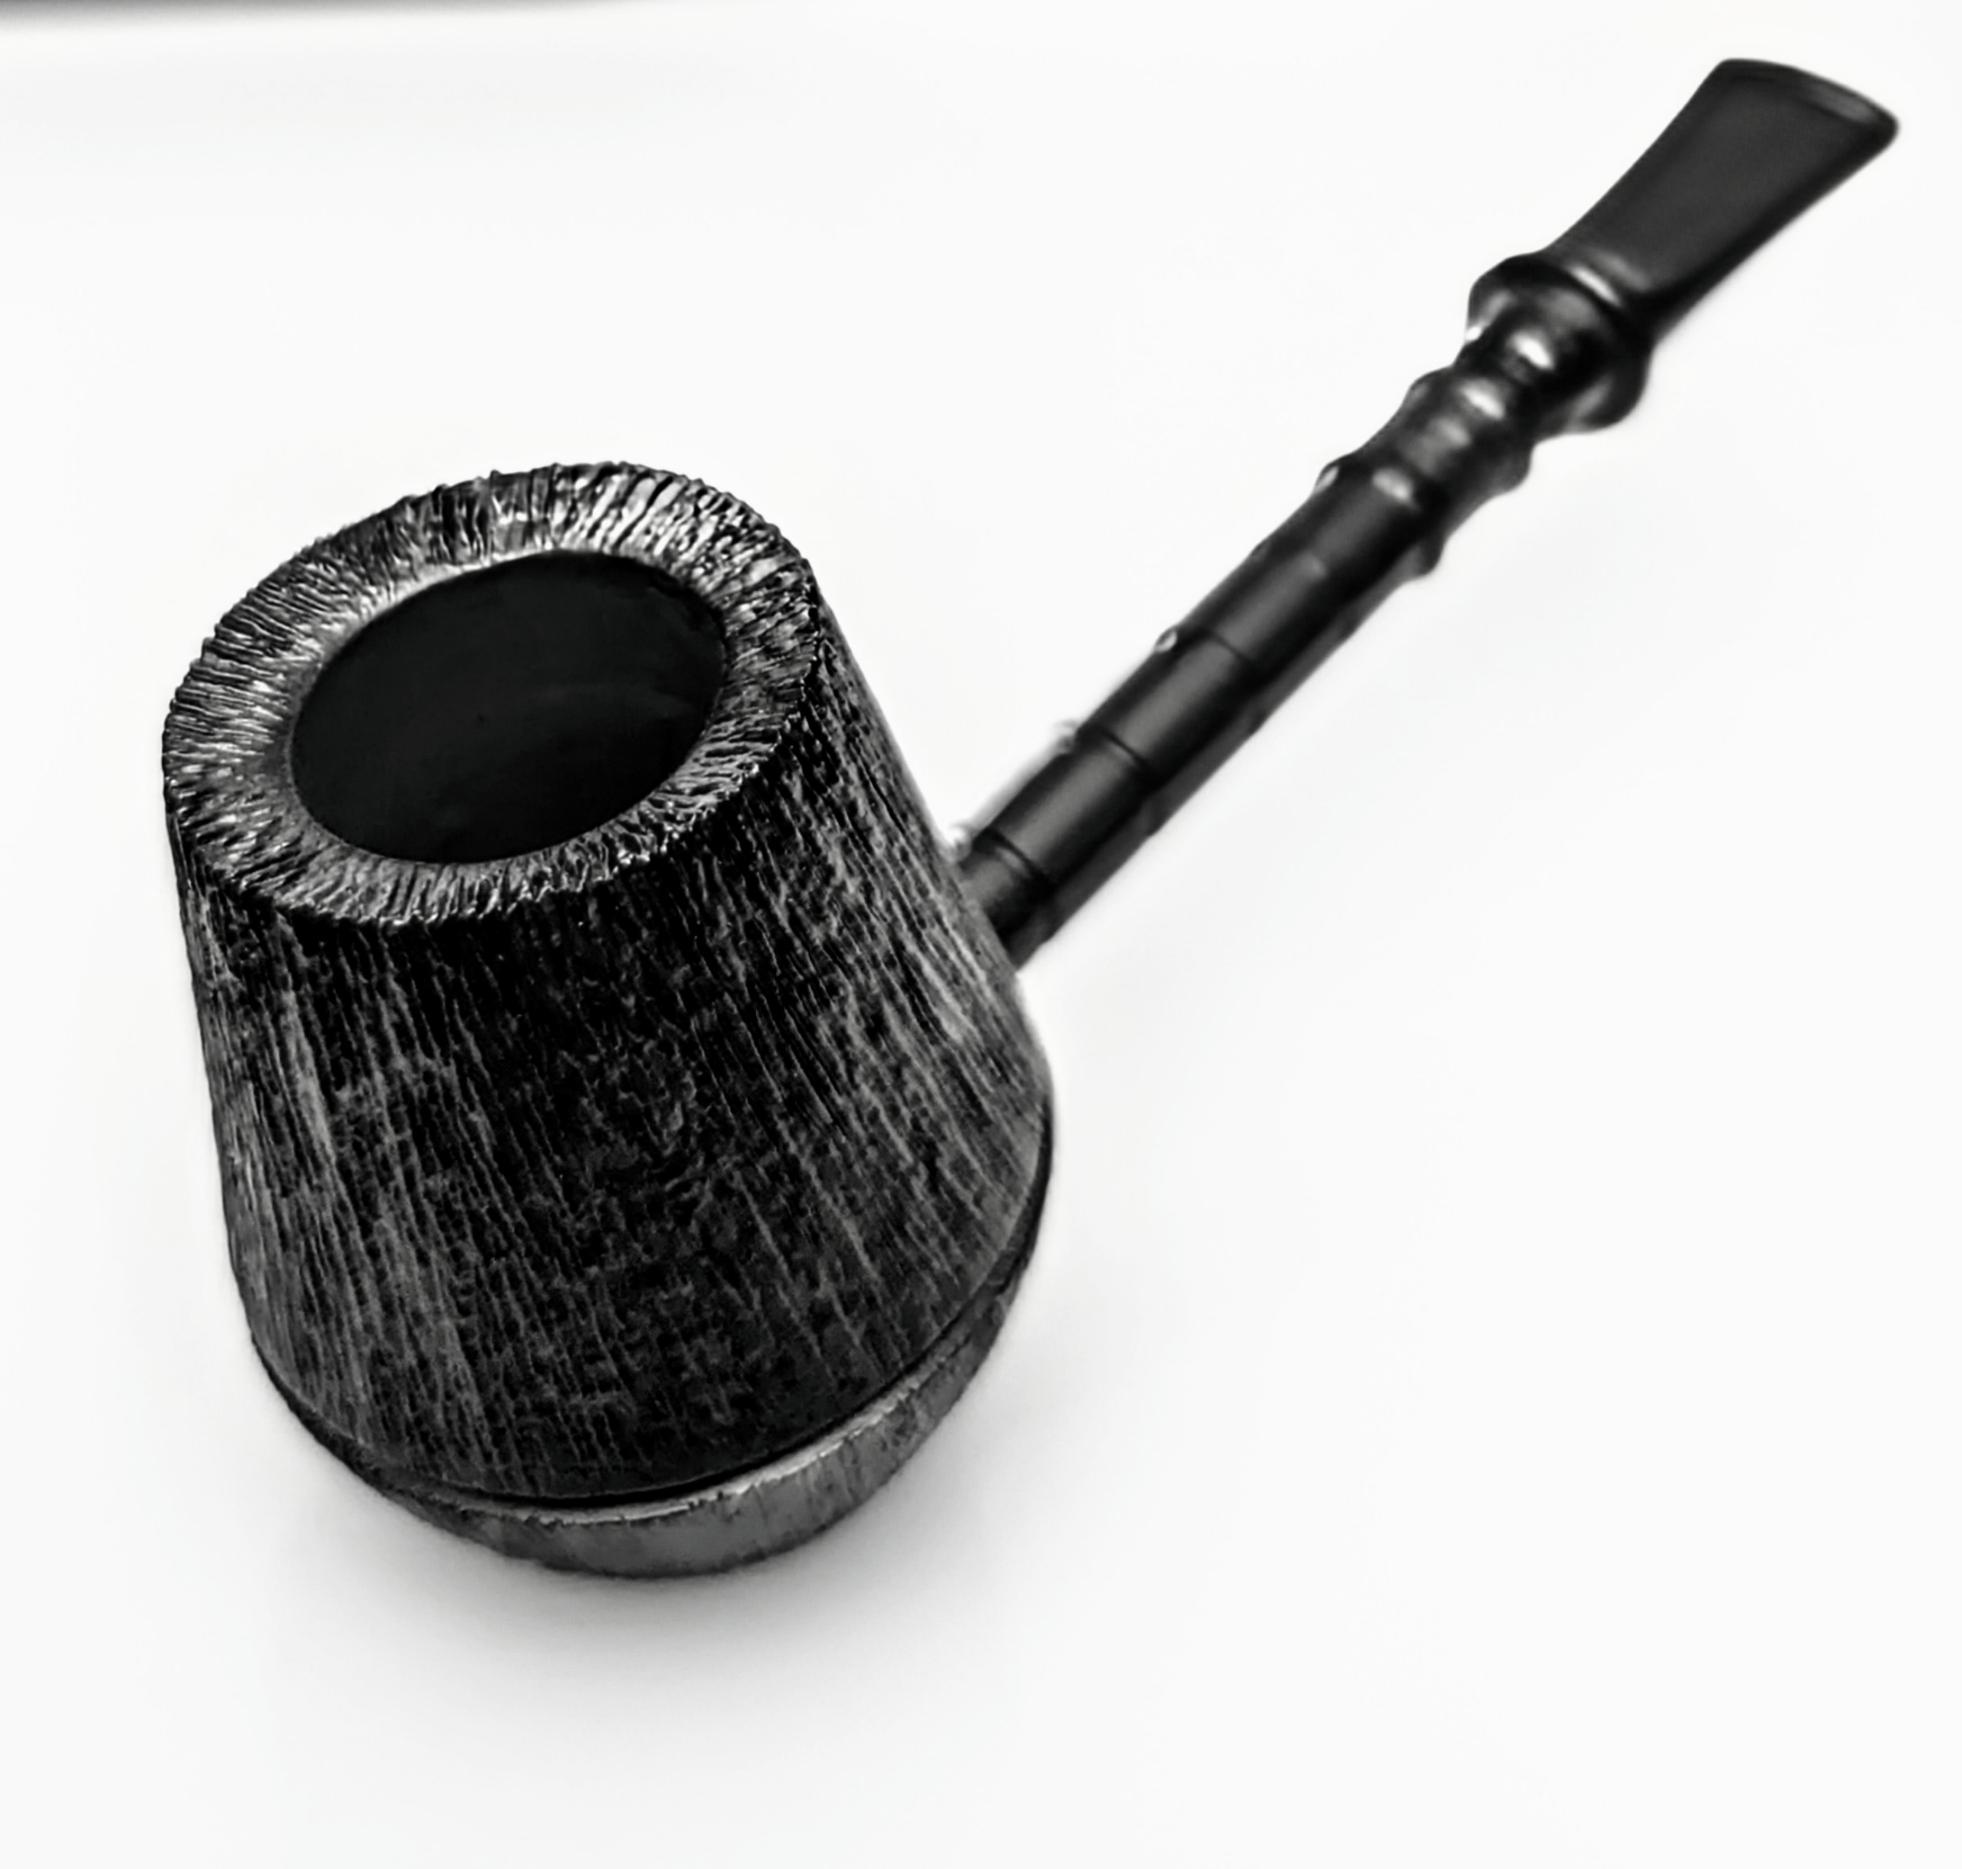 Job Pipe All Black Jetpug (Tobacco pipe in Radica 2 pipe in una)